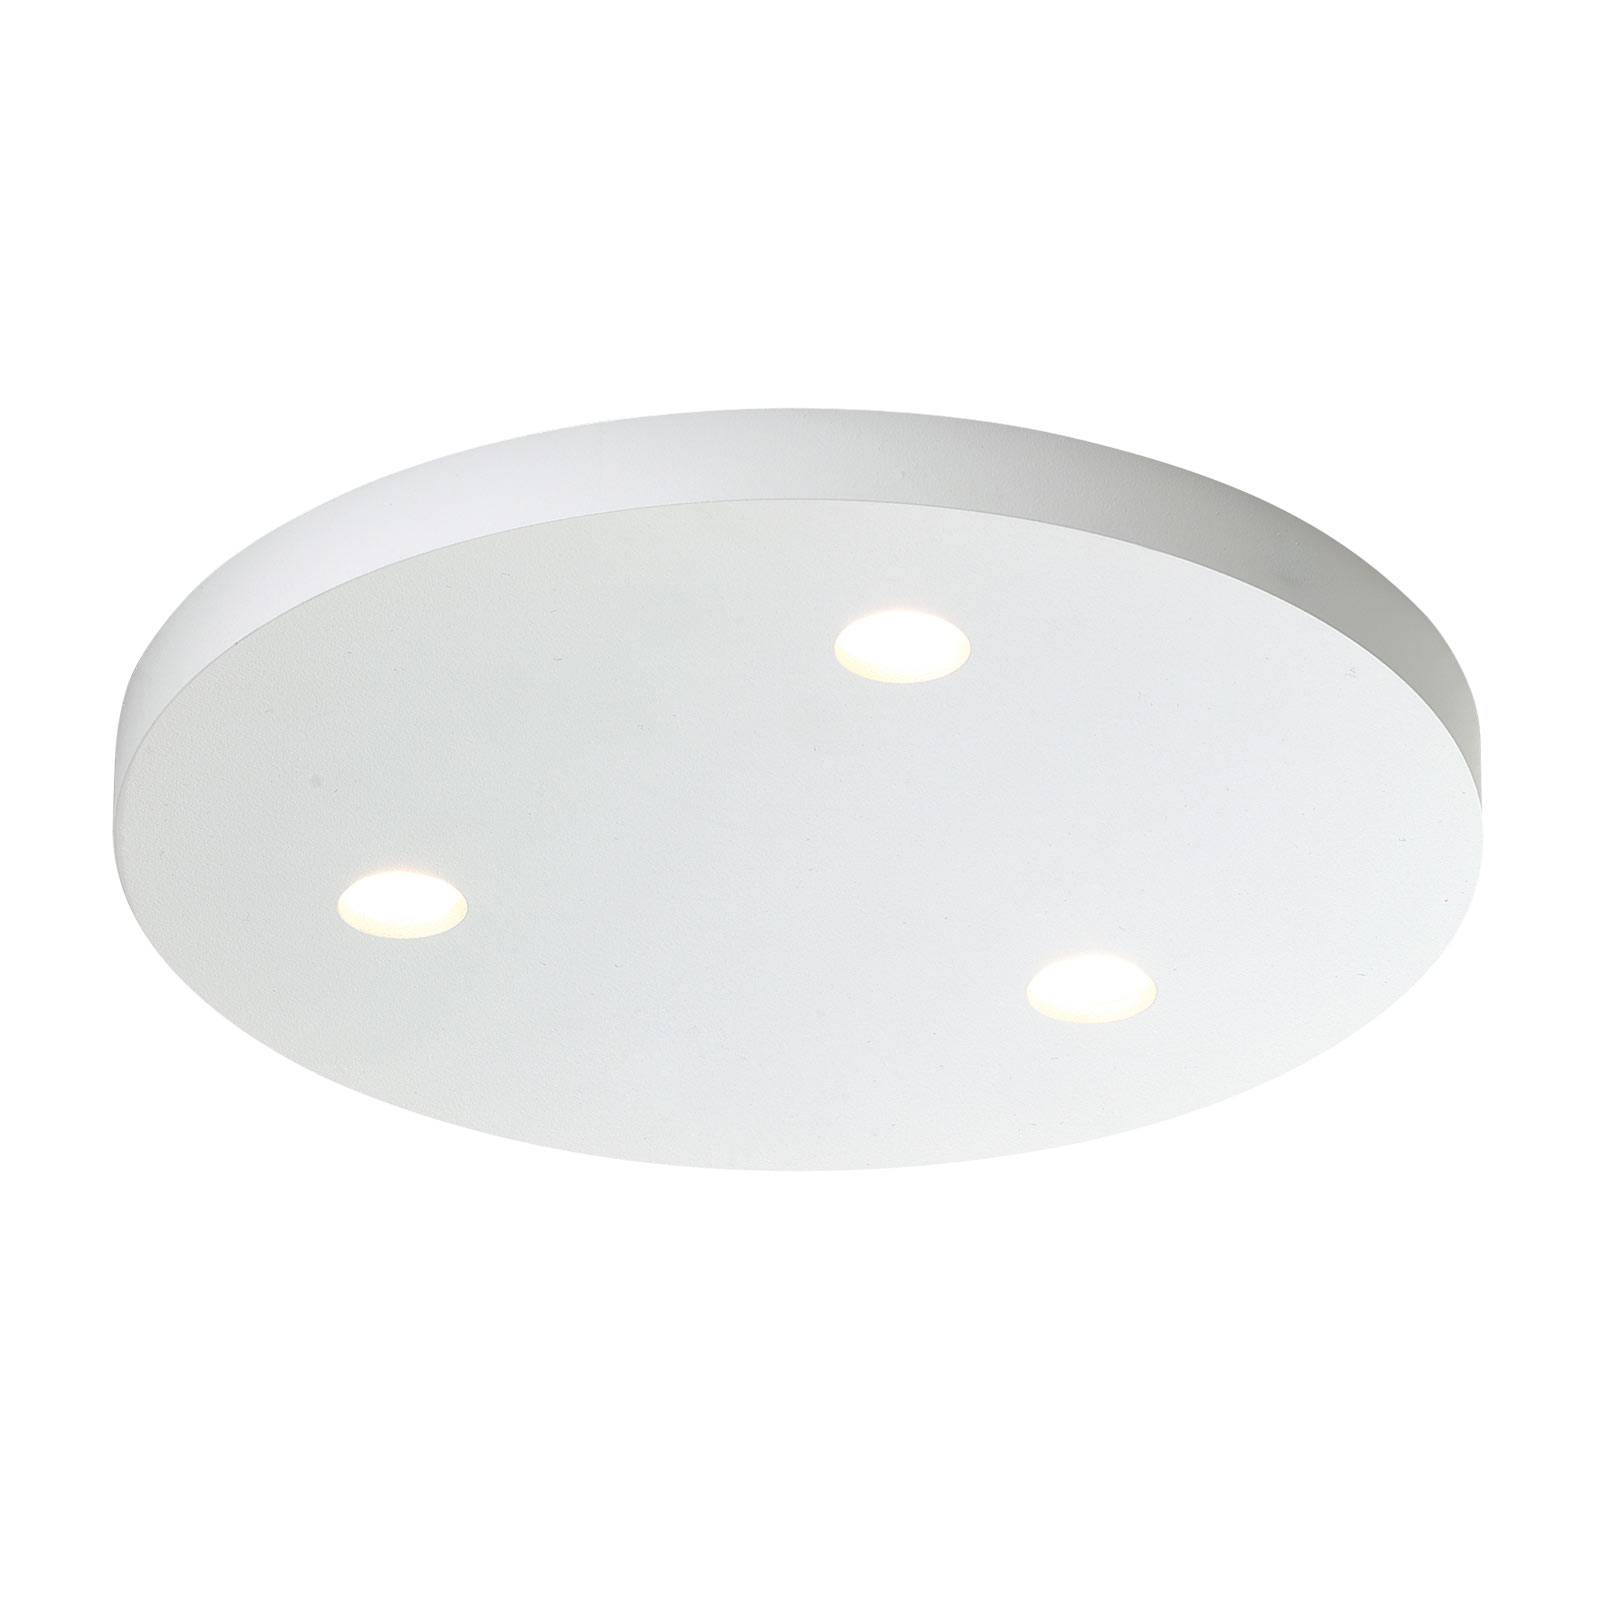 Image of Bopp Close plafonnier LED à 3 lampes rond blanc 4011895496188